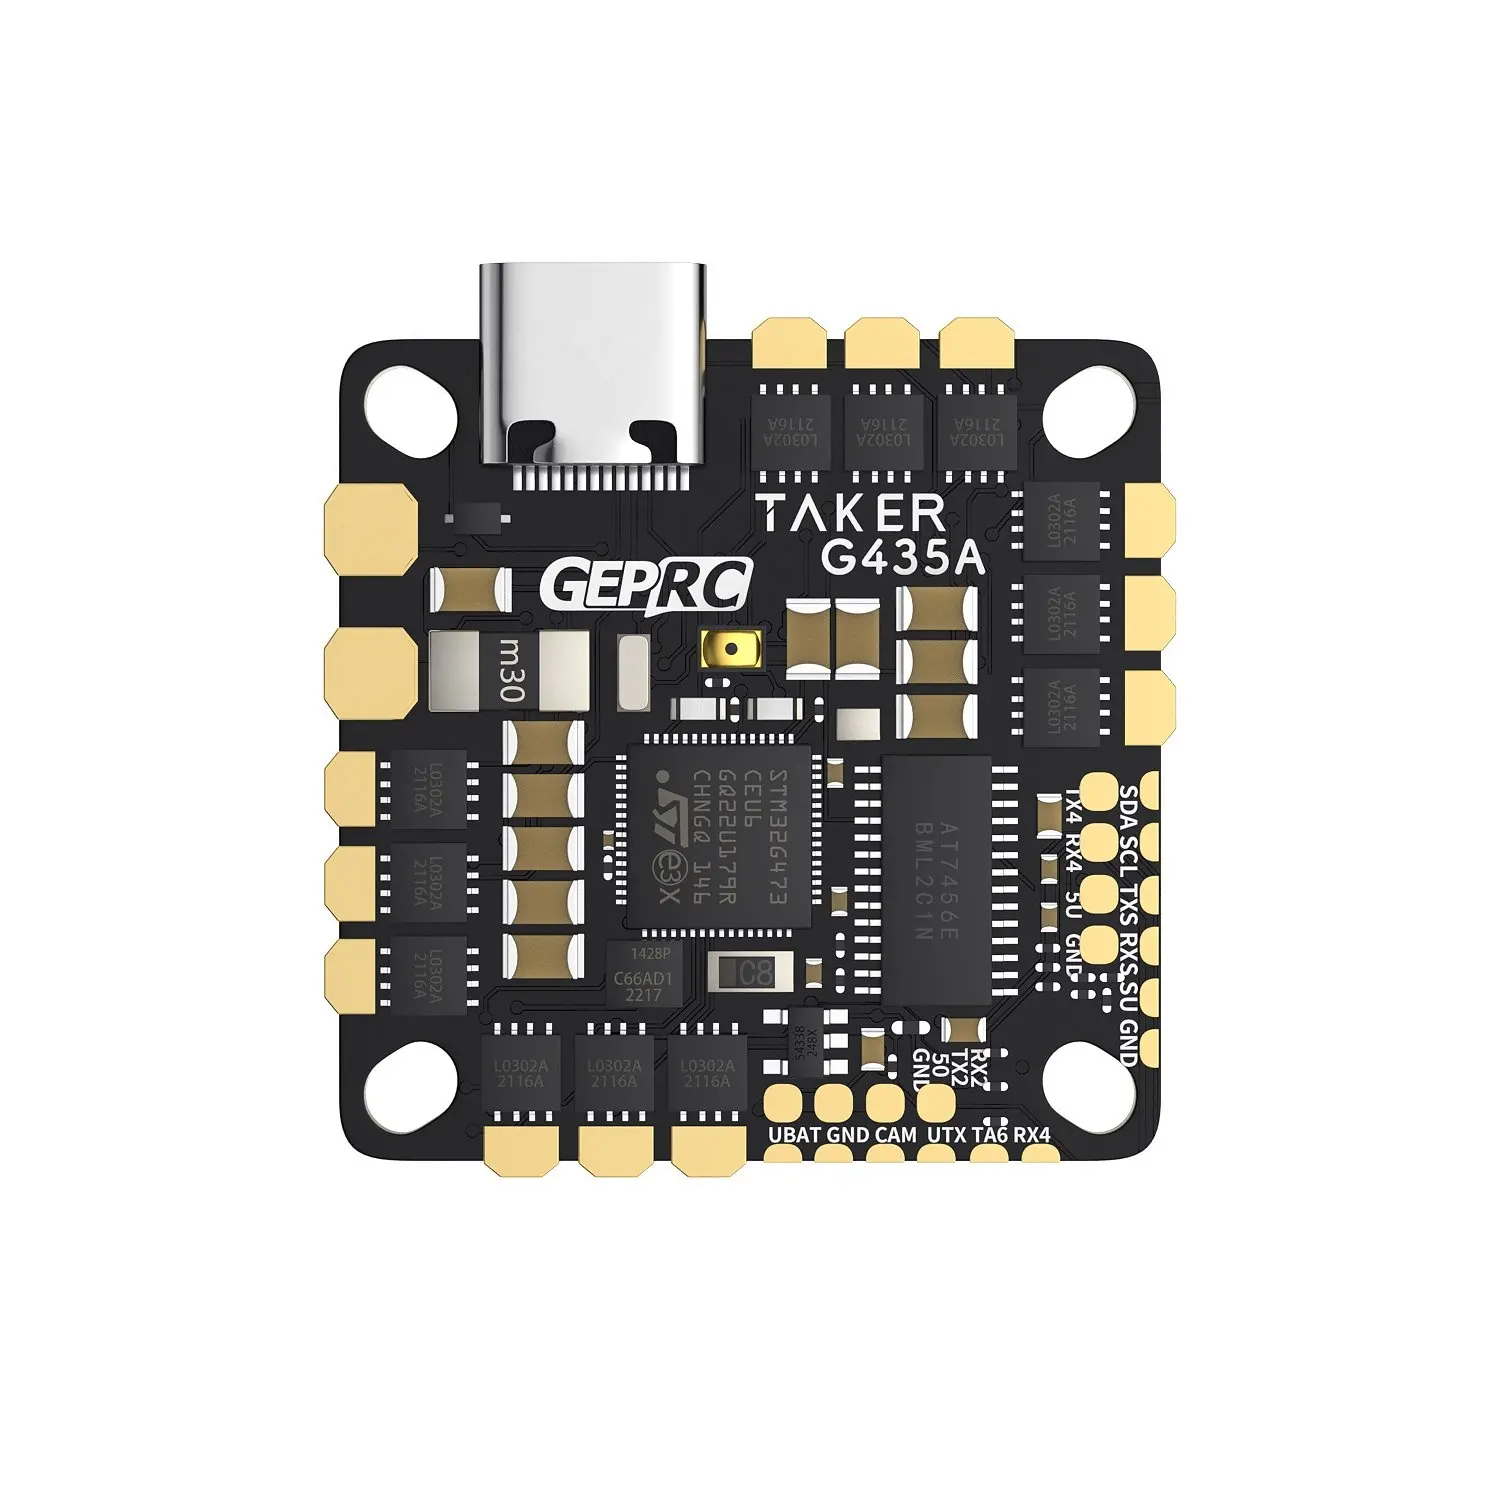 जीईपीआरसी जीईपी टेकर जी4 35ए एआईओ जी473 फ्लाइट कंट्रोल संगत होल पोजीशन उच्च प्रदर्शन मुख्य गति नियंत्रण एफपीवी ड्रोन